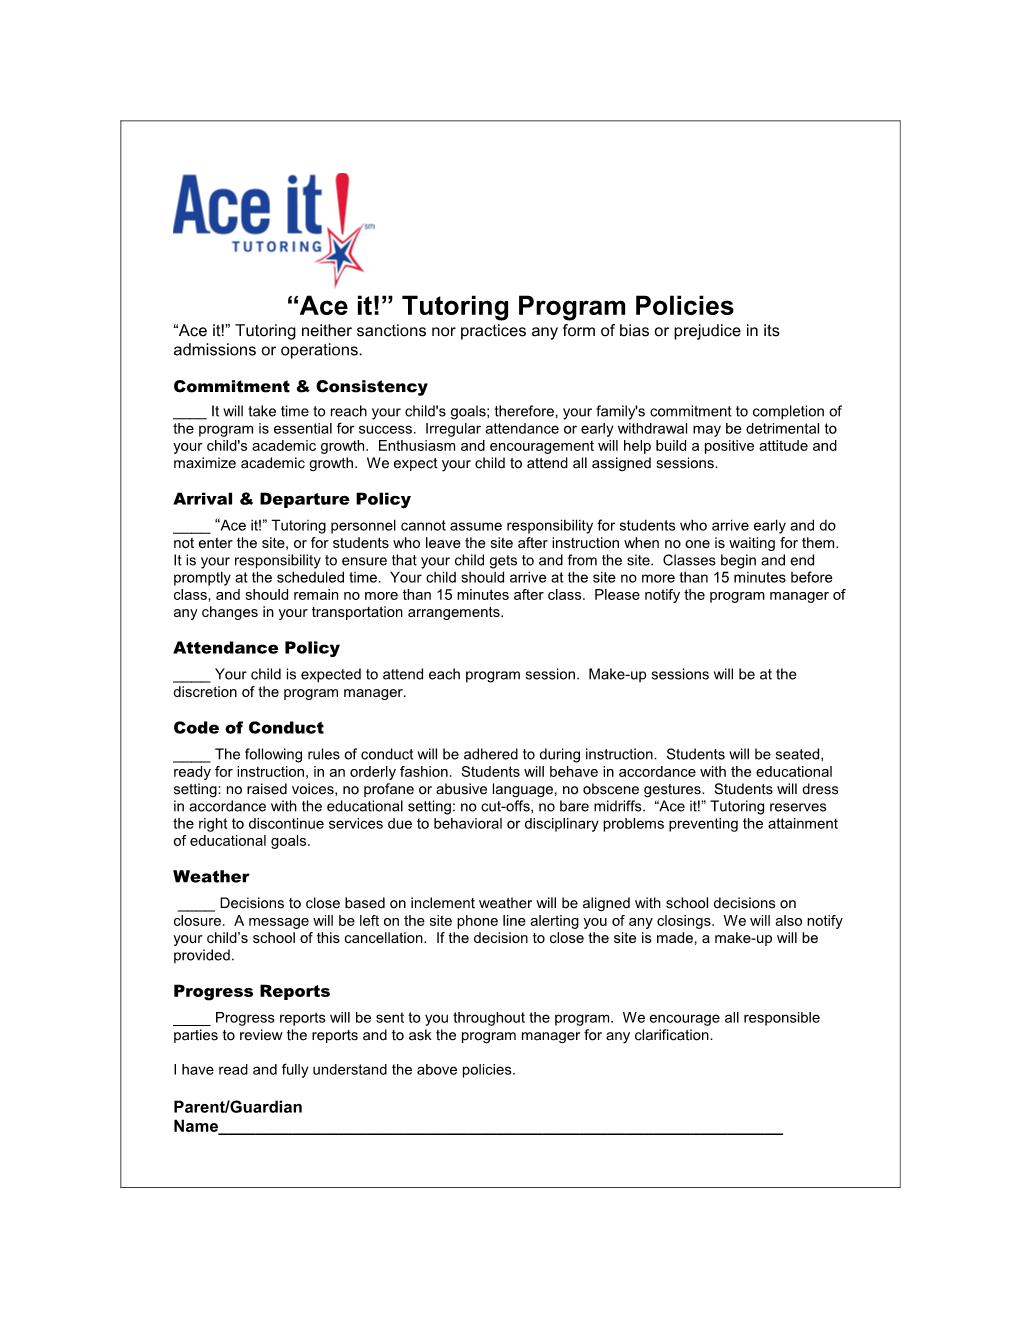 Ace It! Tutoring Program Policies